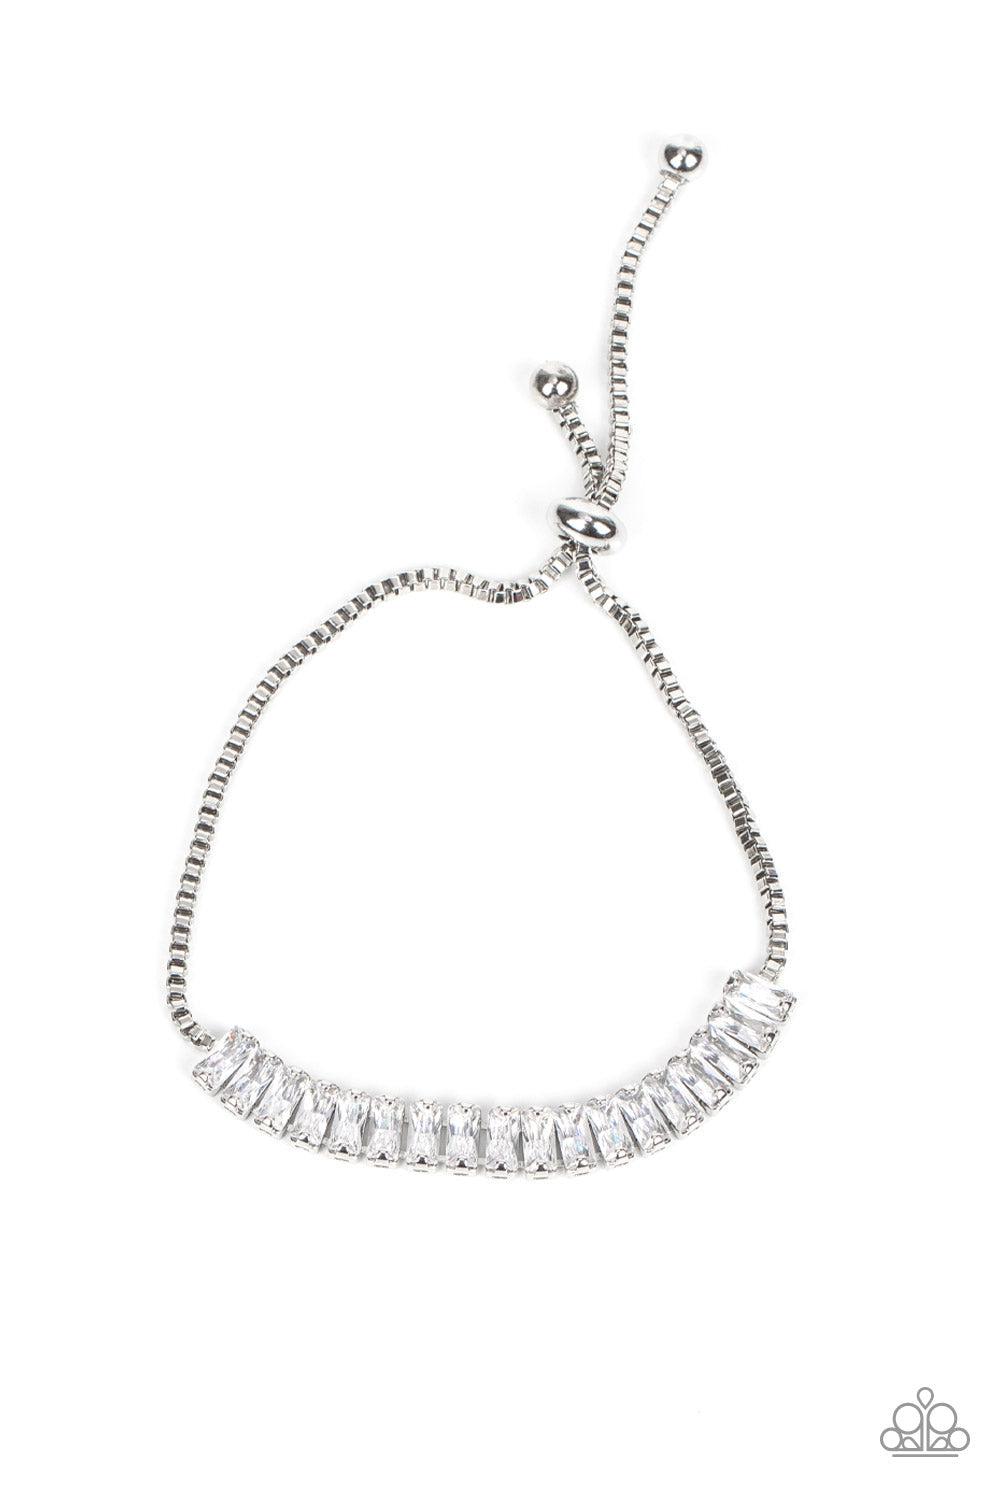 Glitz and Glimmer White Rhinestone Slide Bracelet - Paparazzi Accessories- lightbox - CarasShop.com - $5 Jewelry by Cara Jewels